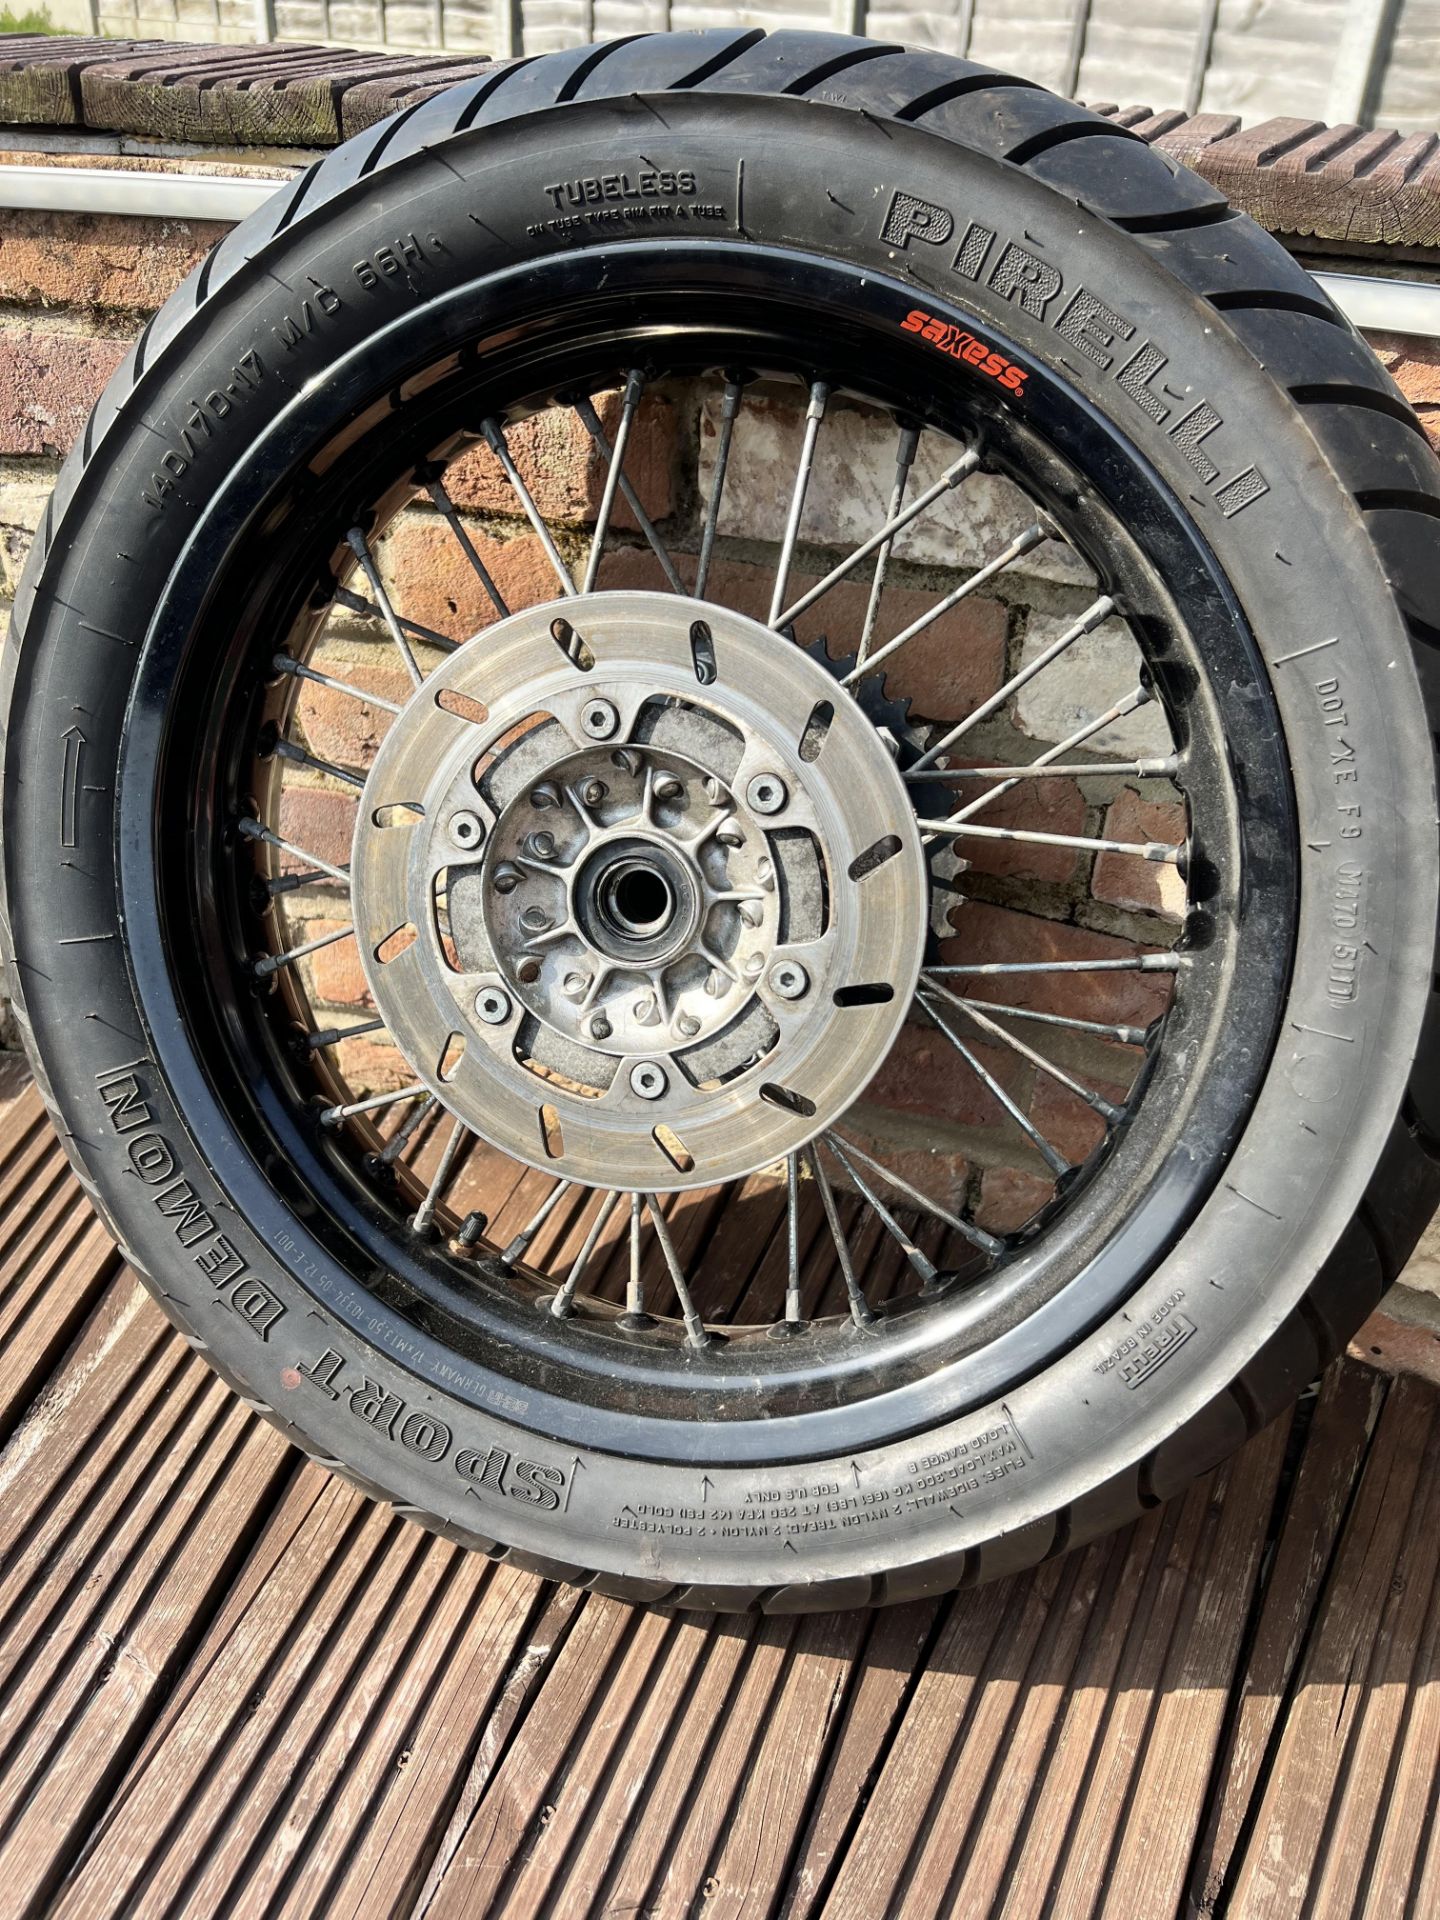 Super moto wheels, Yamaha wr125x wheels with new Pirelli tires ready to run *NO VAT* - Image 2 of 3